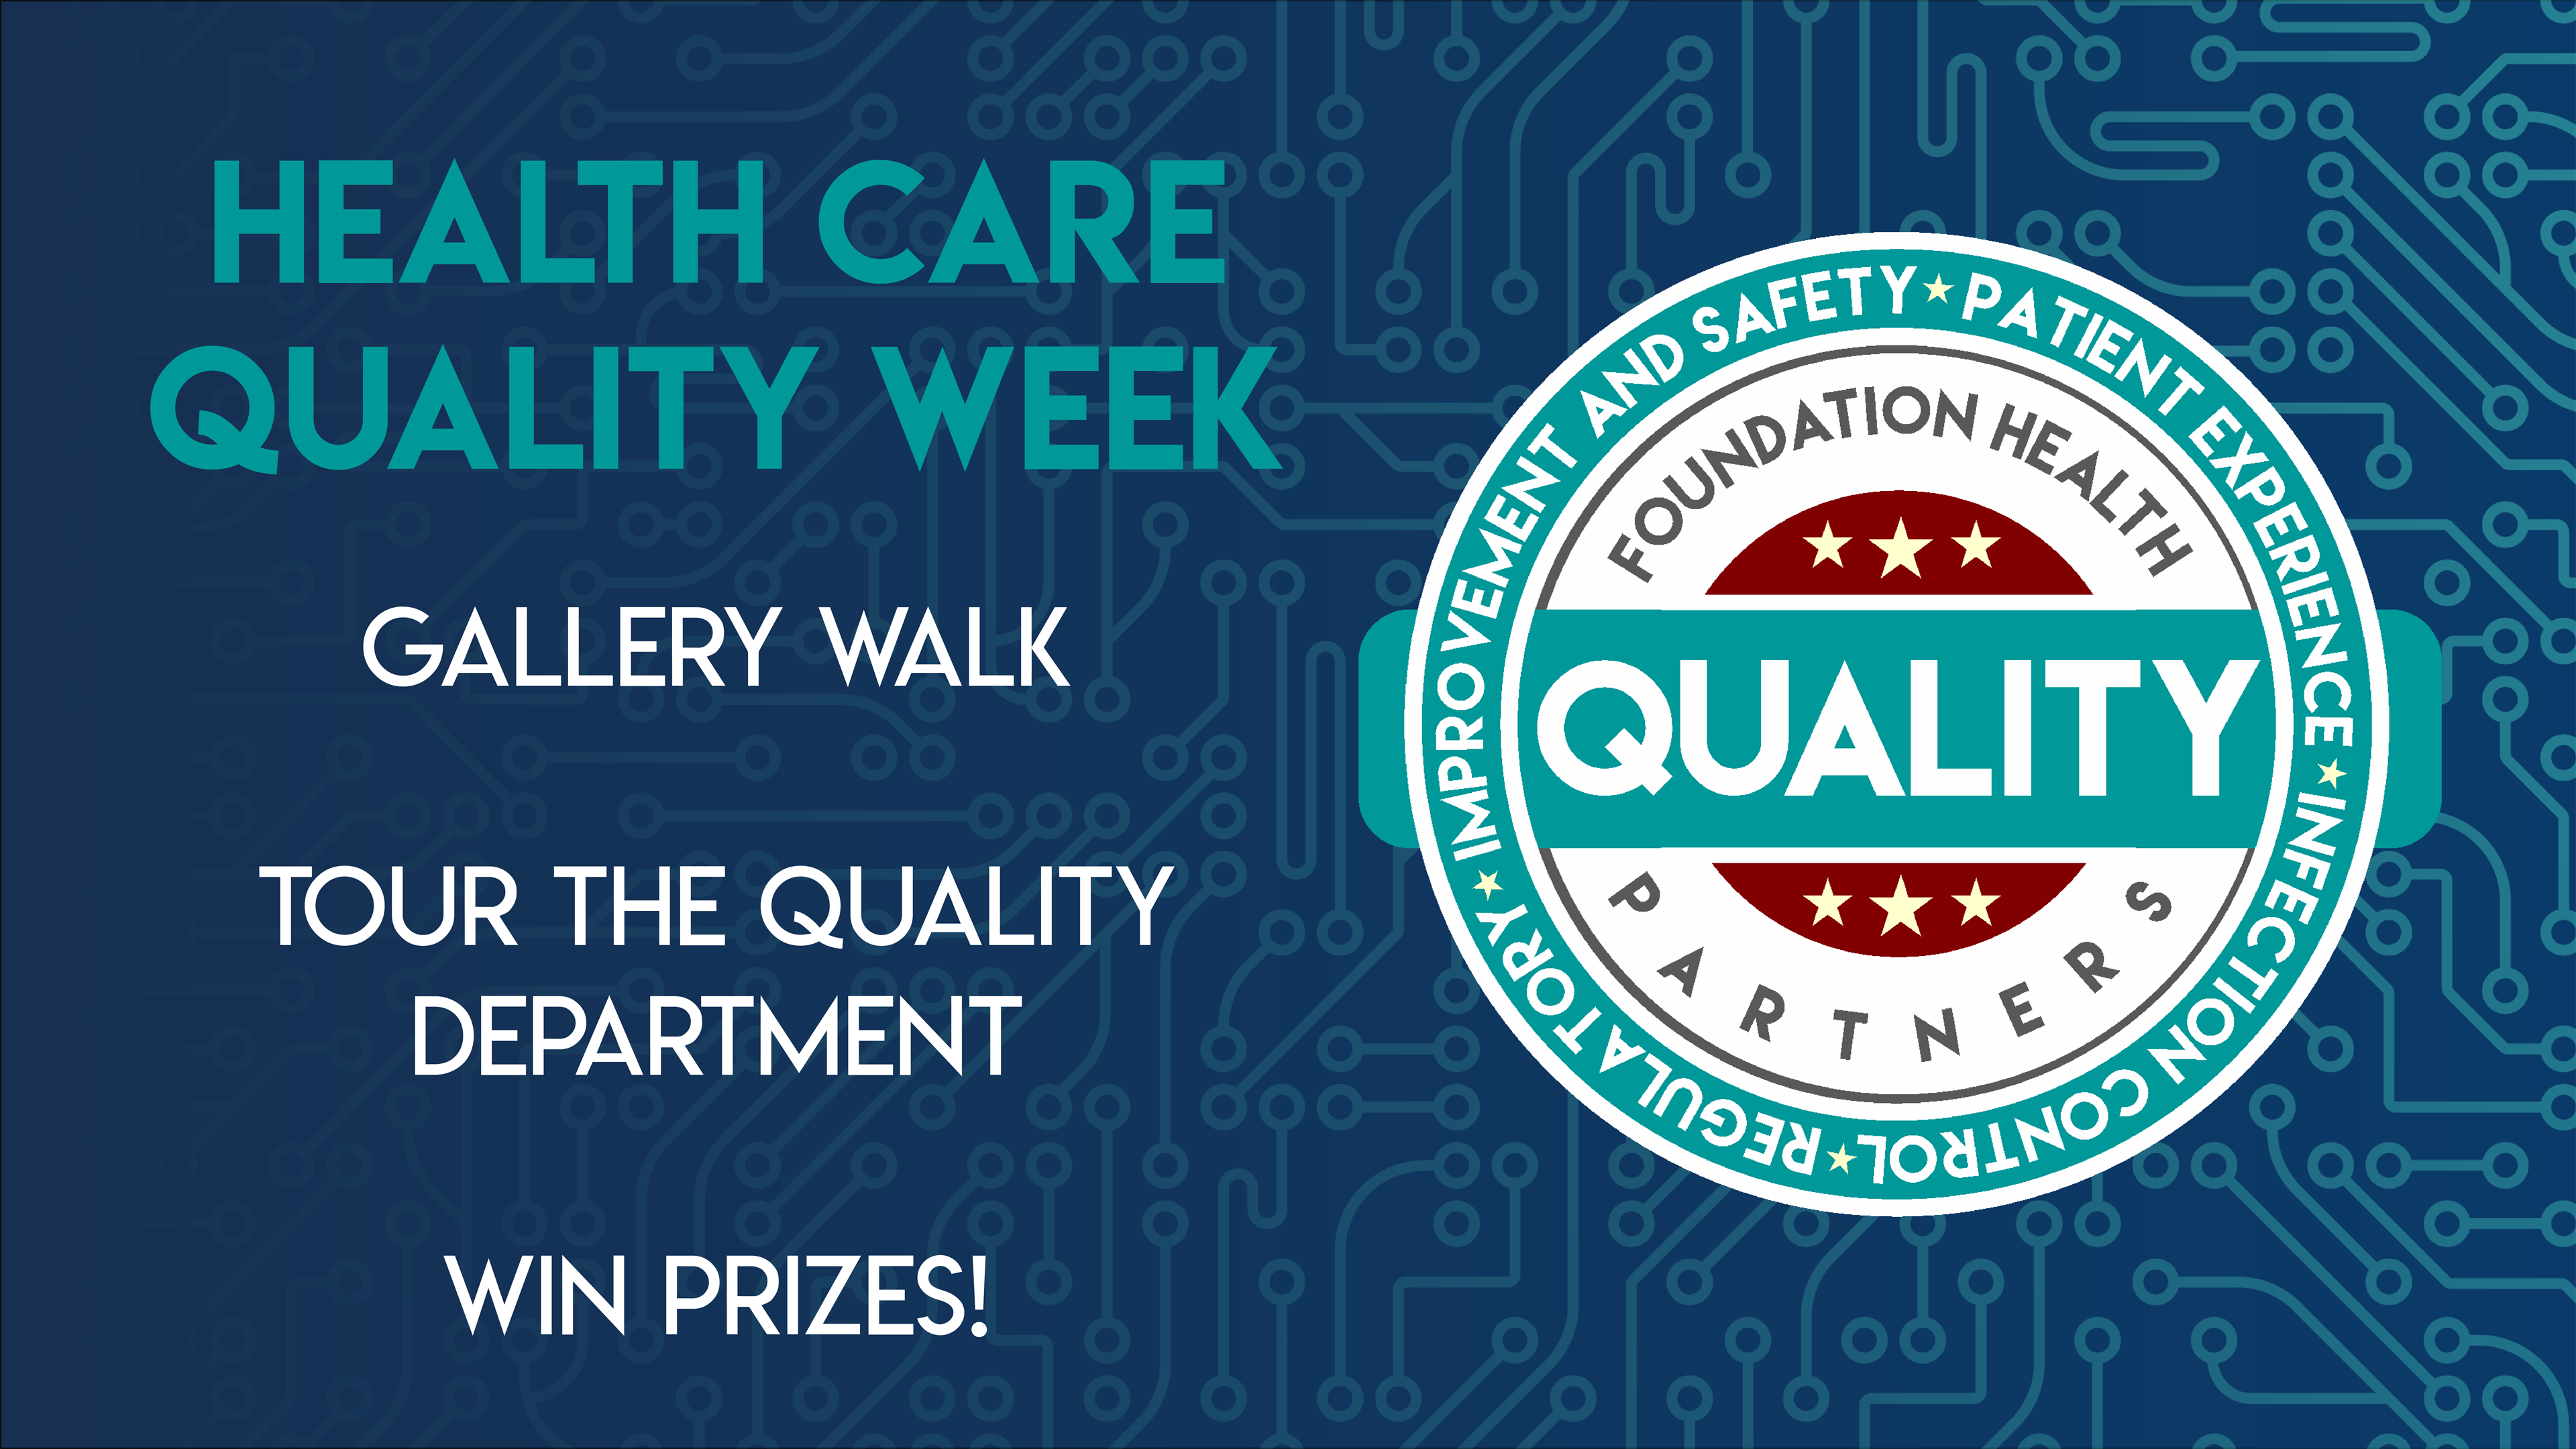 Health Care Quality Week Foundation Health